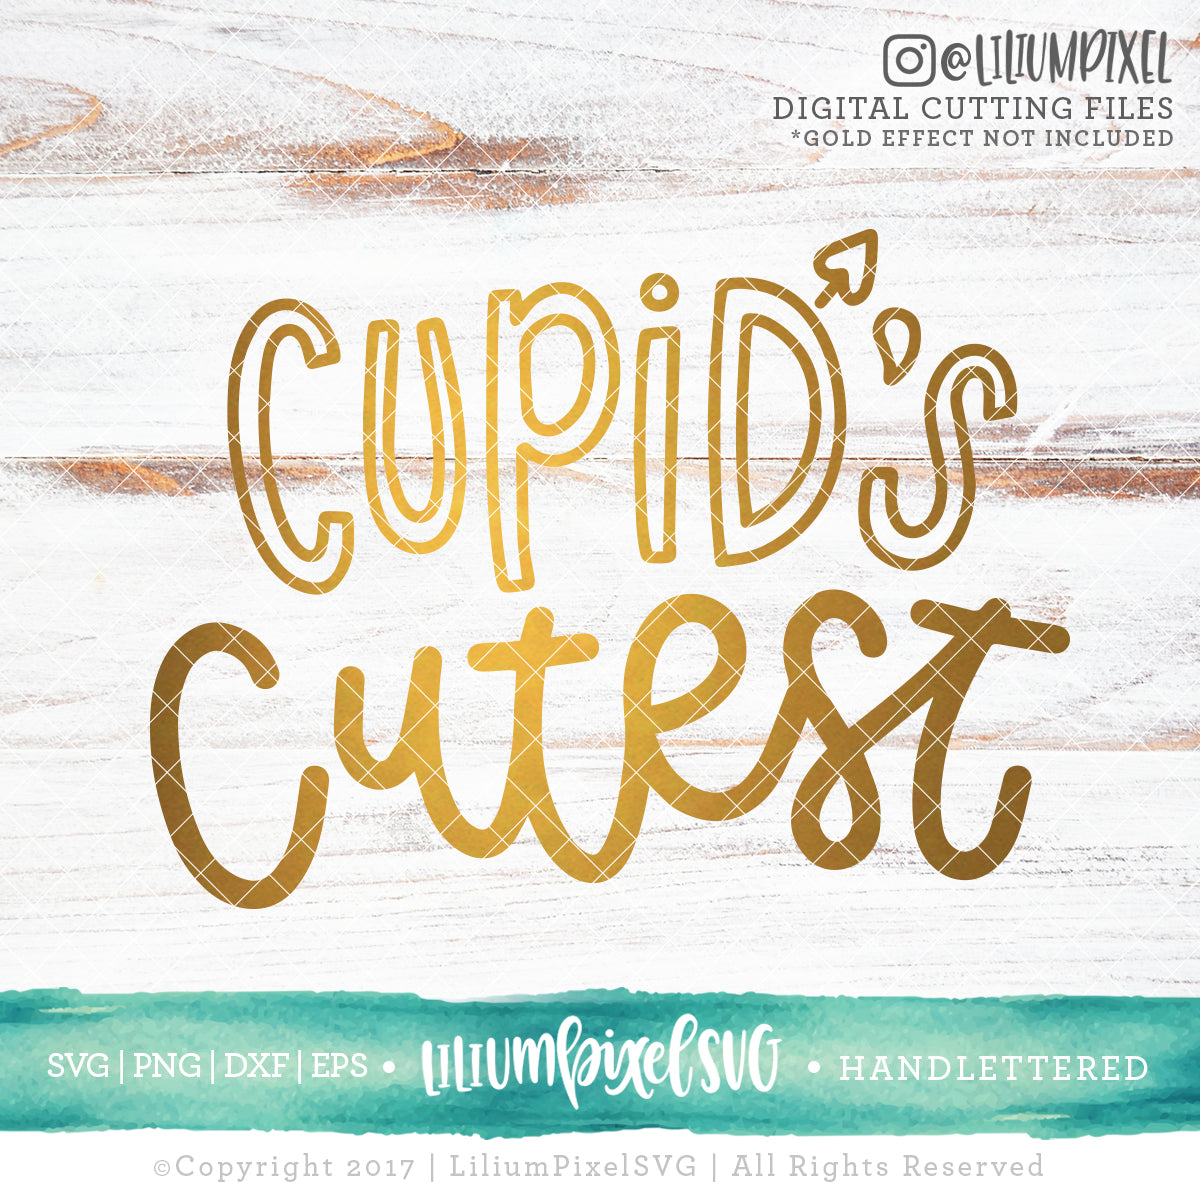 Cupid's Cutest - SVG PNG DXF EPS Cut File • Silhouette • Cricut • More